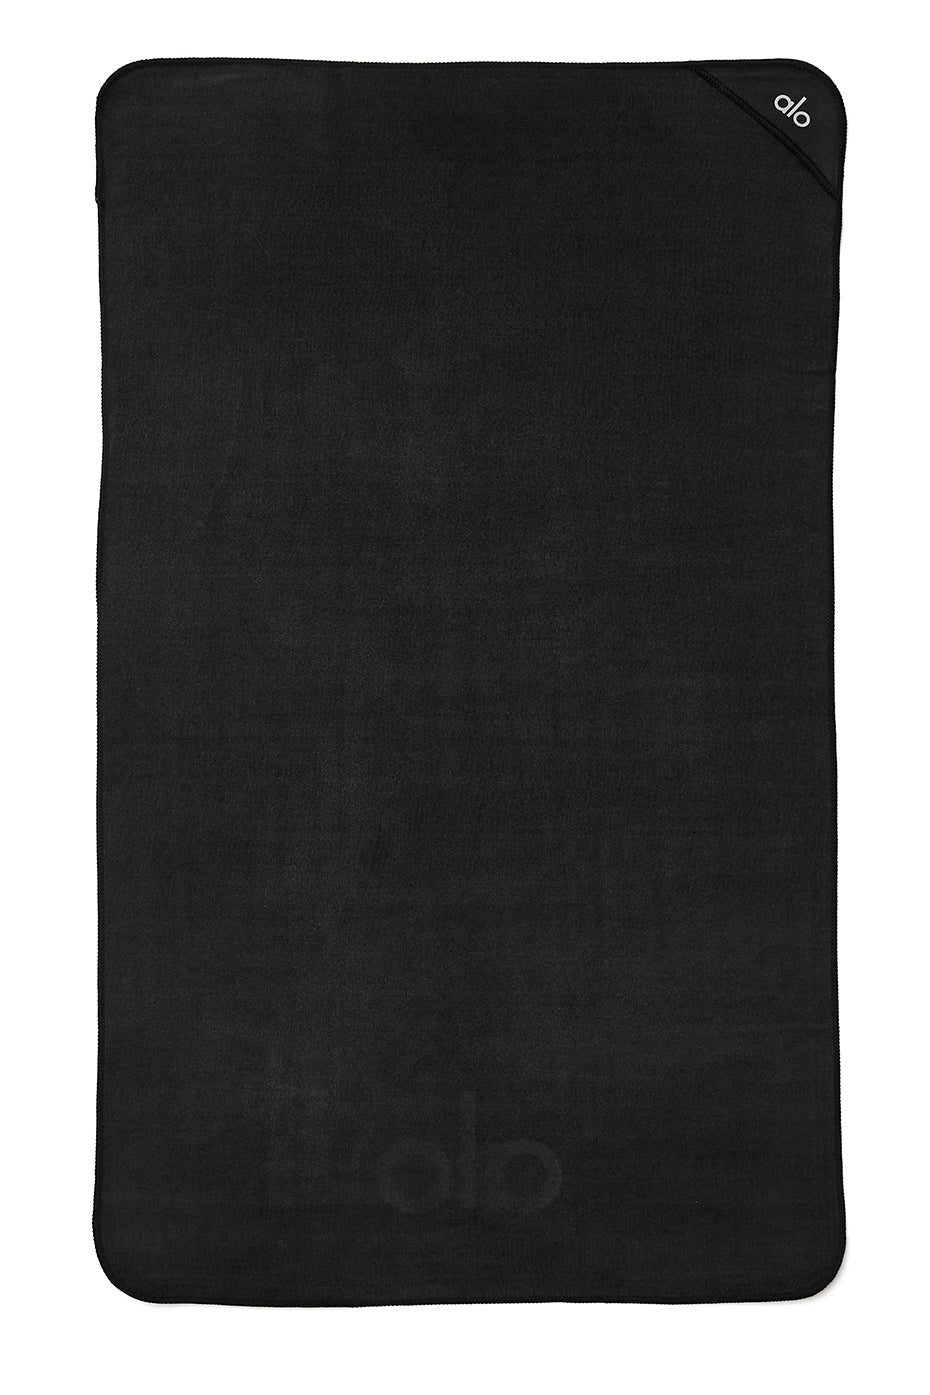 Alo Yoga Keep It Dry Packable Tote - Black – Soulcielite